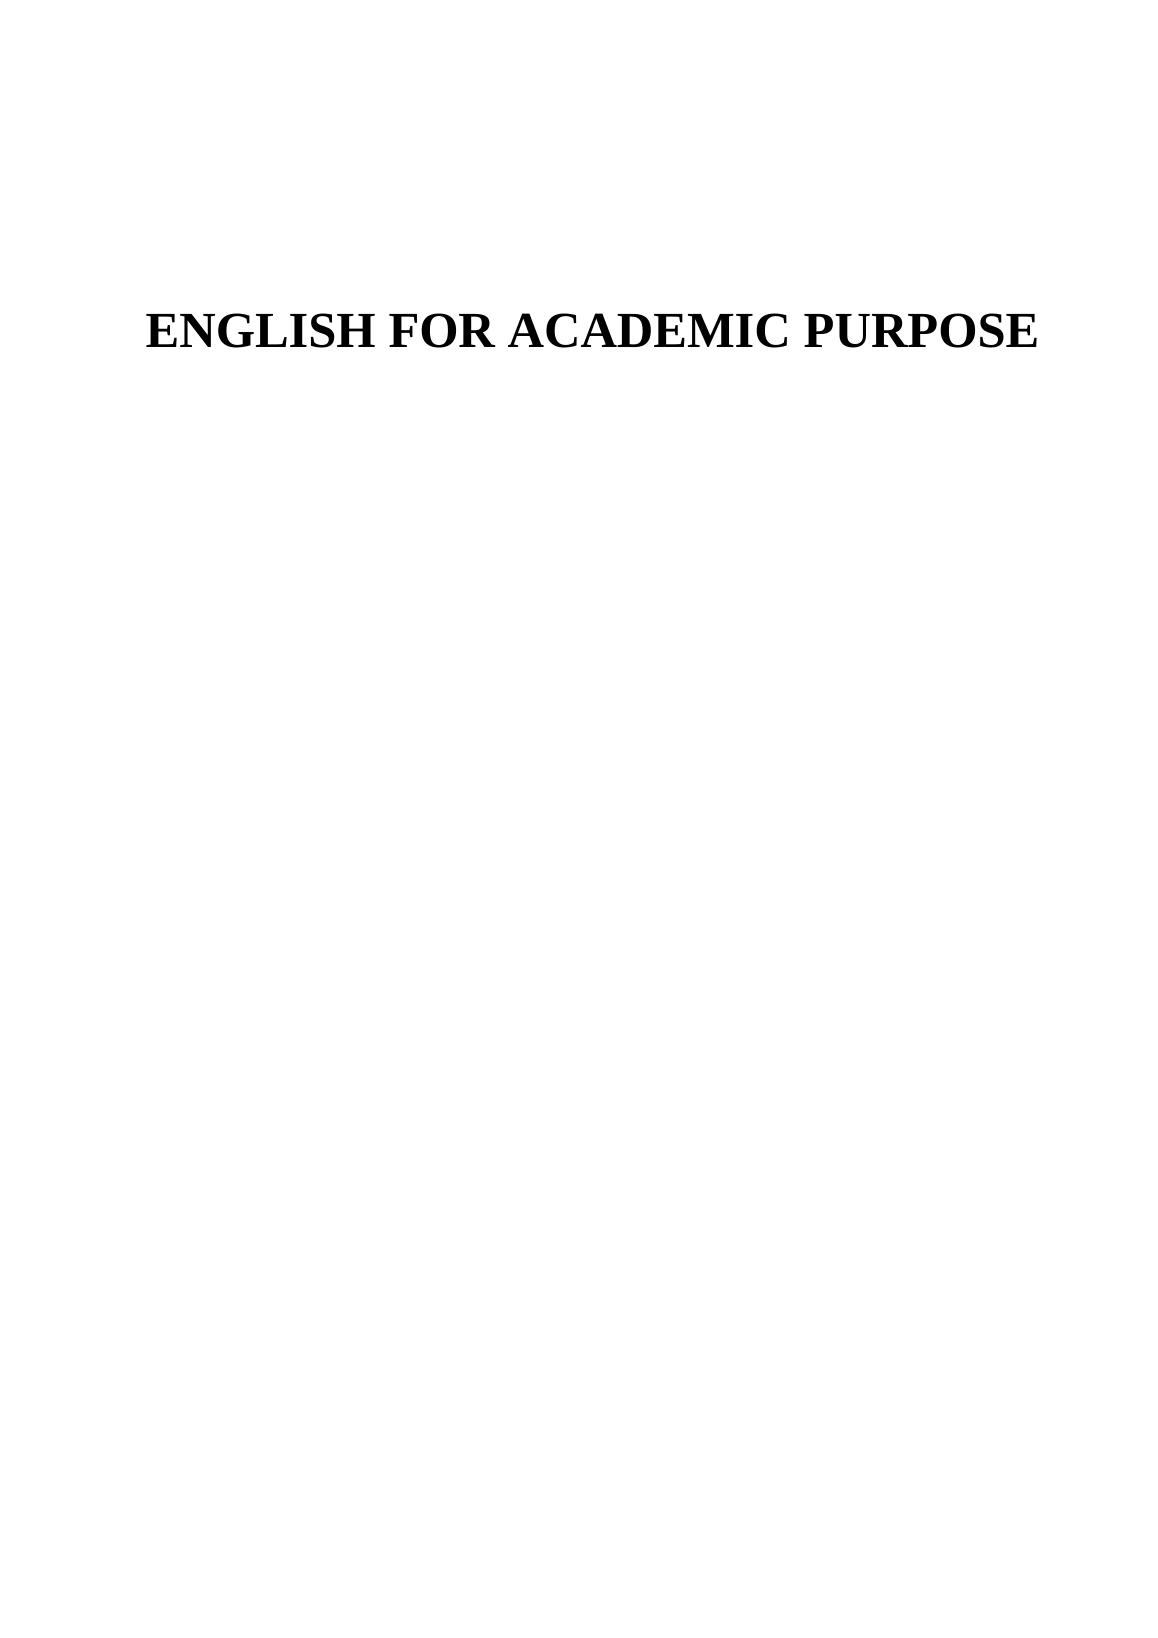 English for Academic Purpose - Portfolio Evidence_1